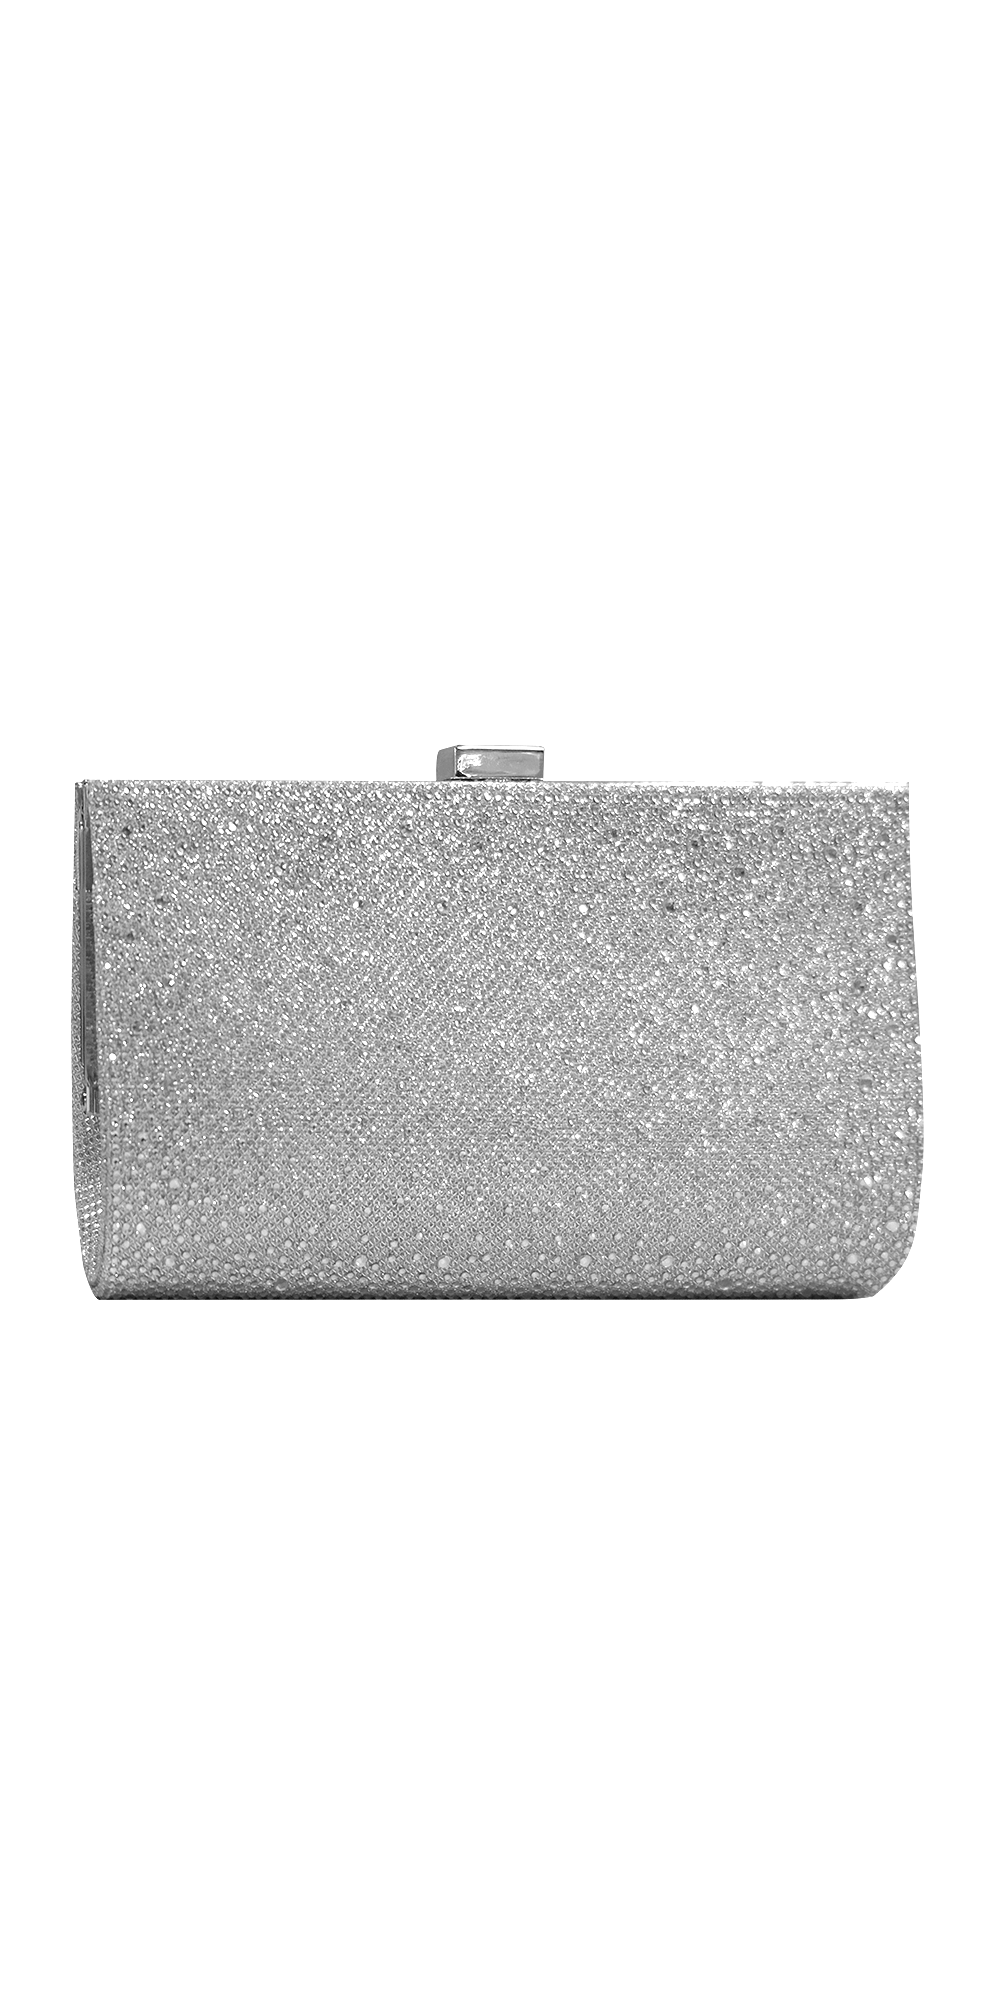 Camille La Vie Beaded Glitter Metal Frame Handbag OS / silver